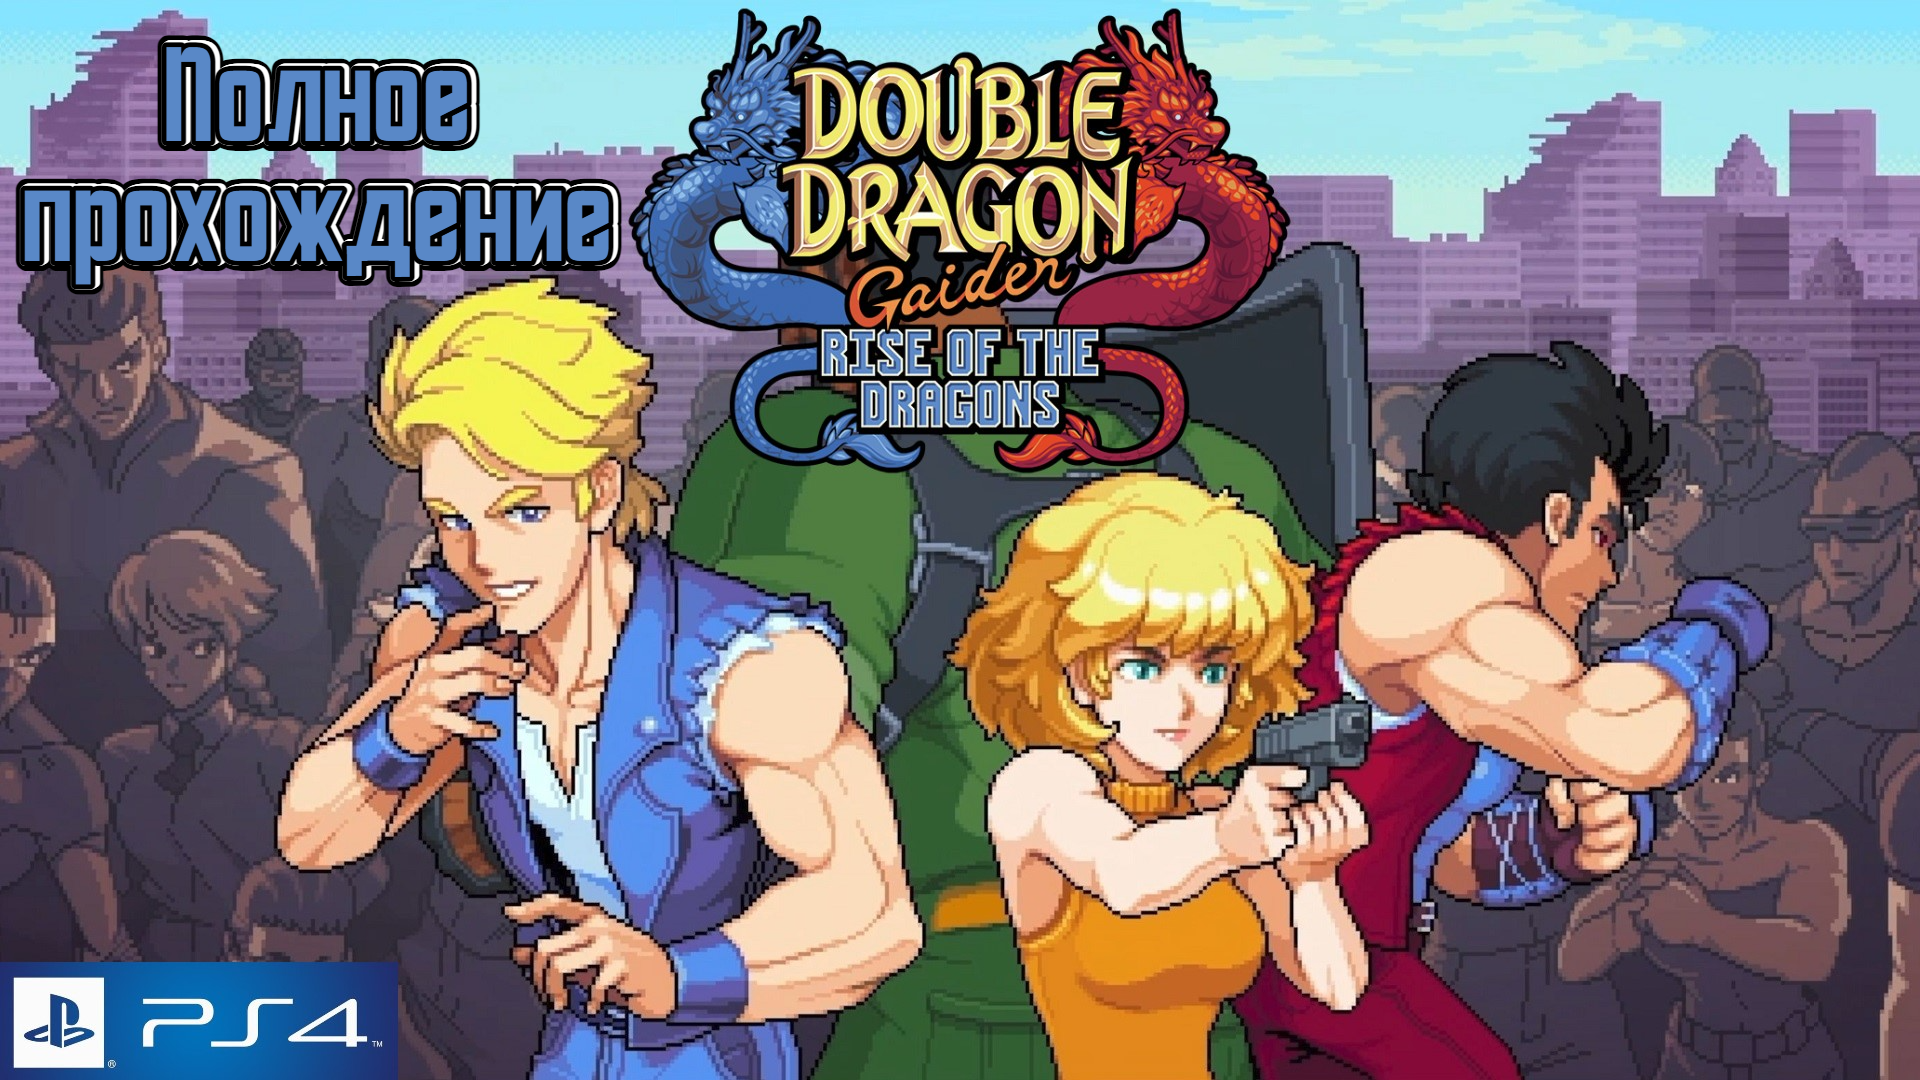 Double dragon gaiden rise of the dragons Полное прохождение. PlayStation 4. Full HD